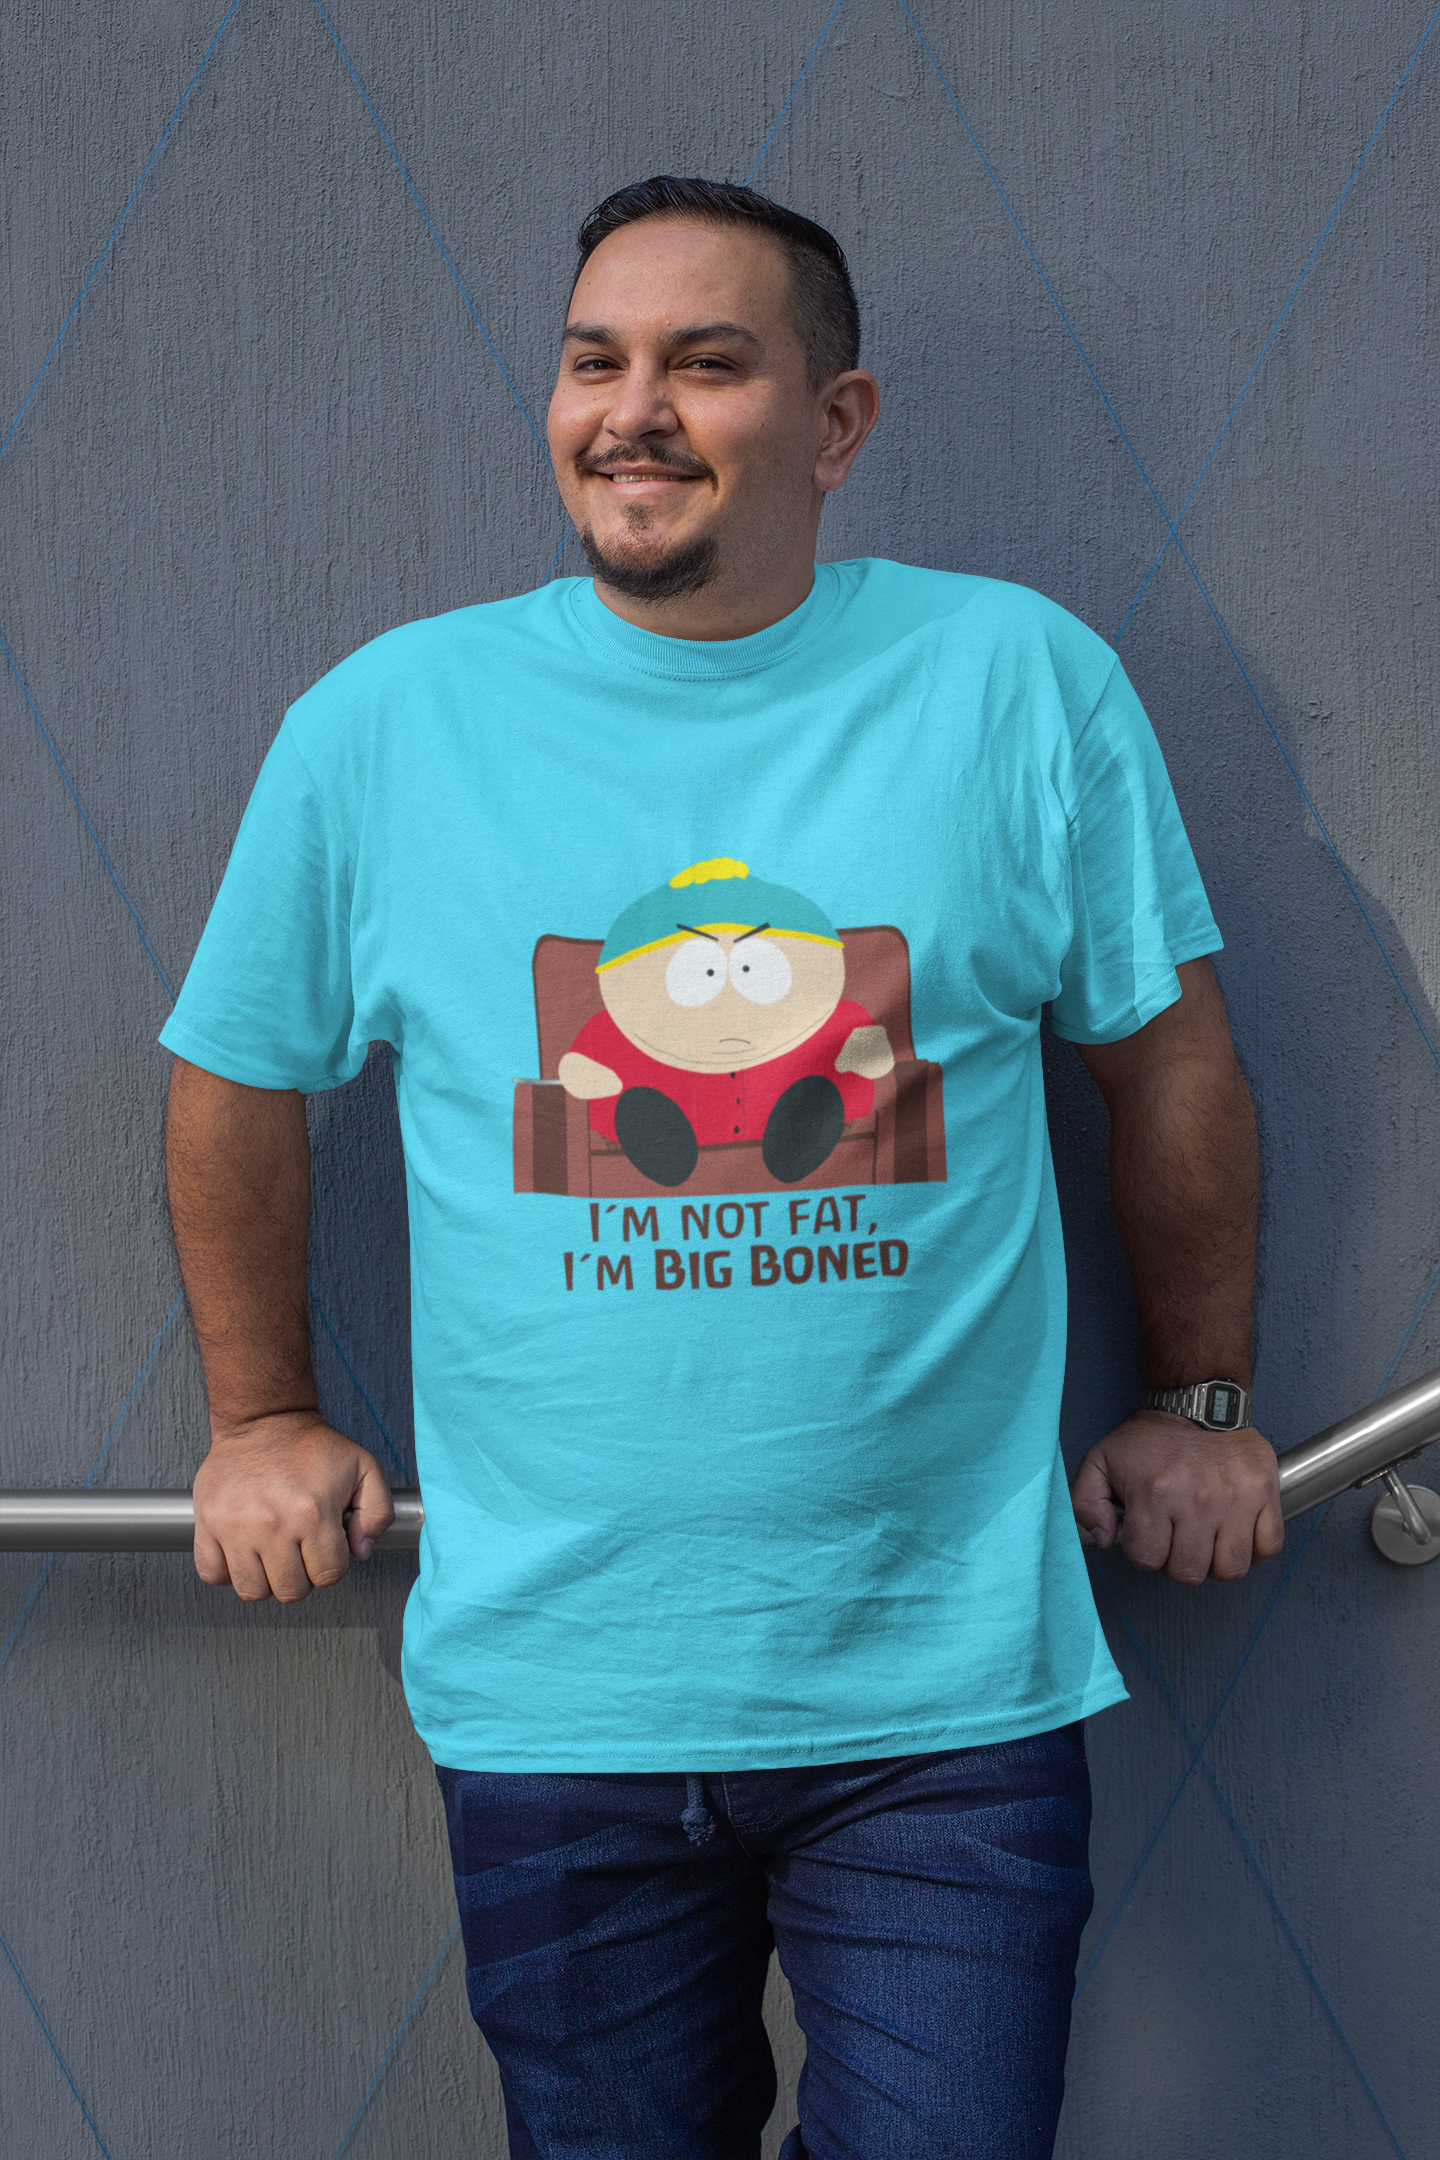 "I'M NOT FAT, I'M BIG BONED" - Eric Cartman, South Park | Unisex T-Shirt